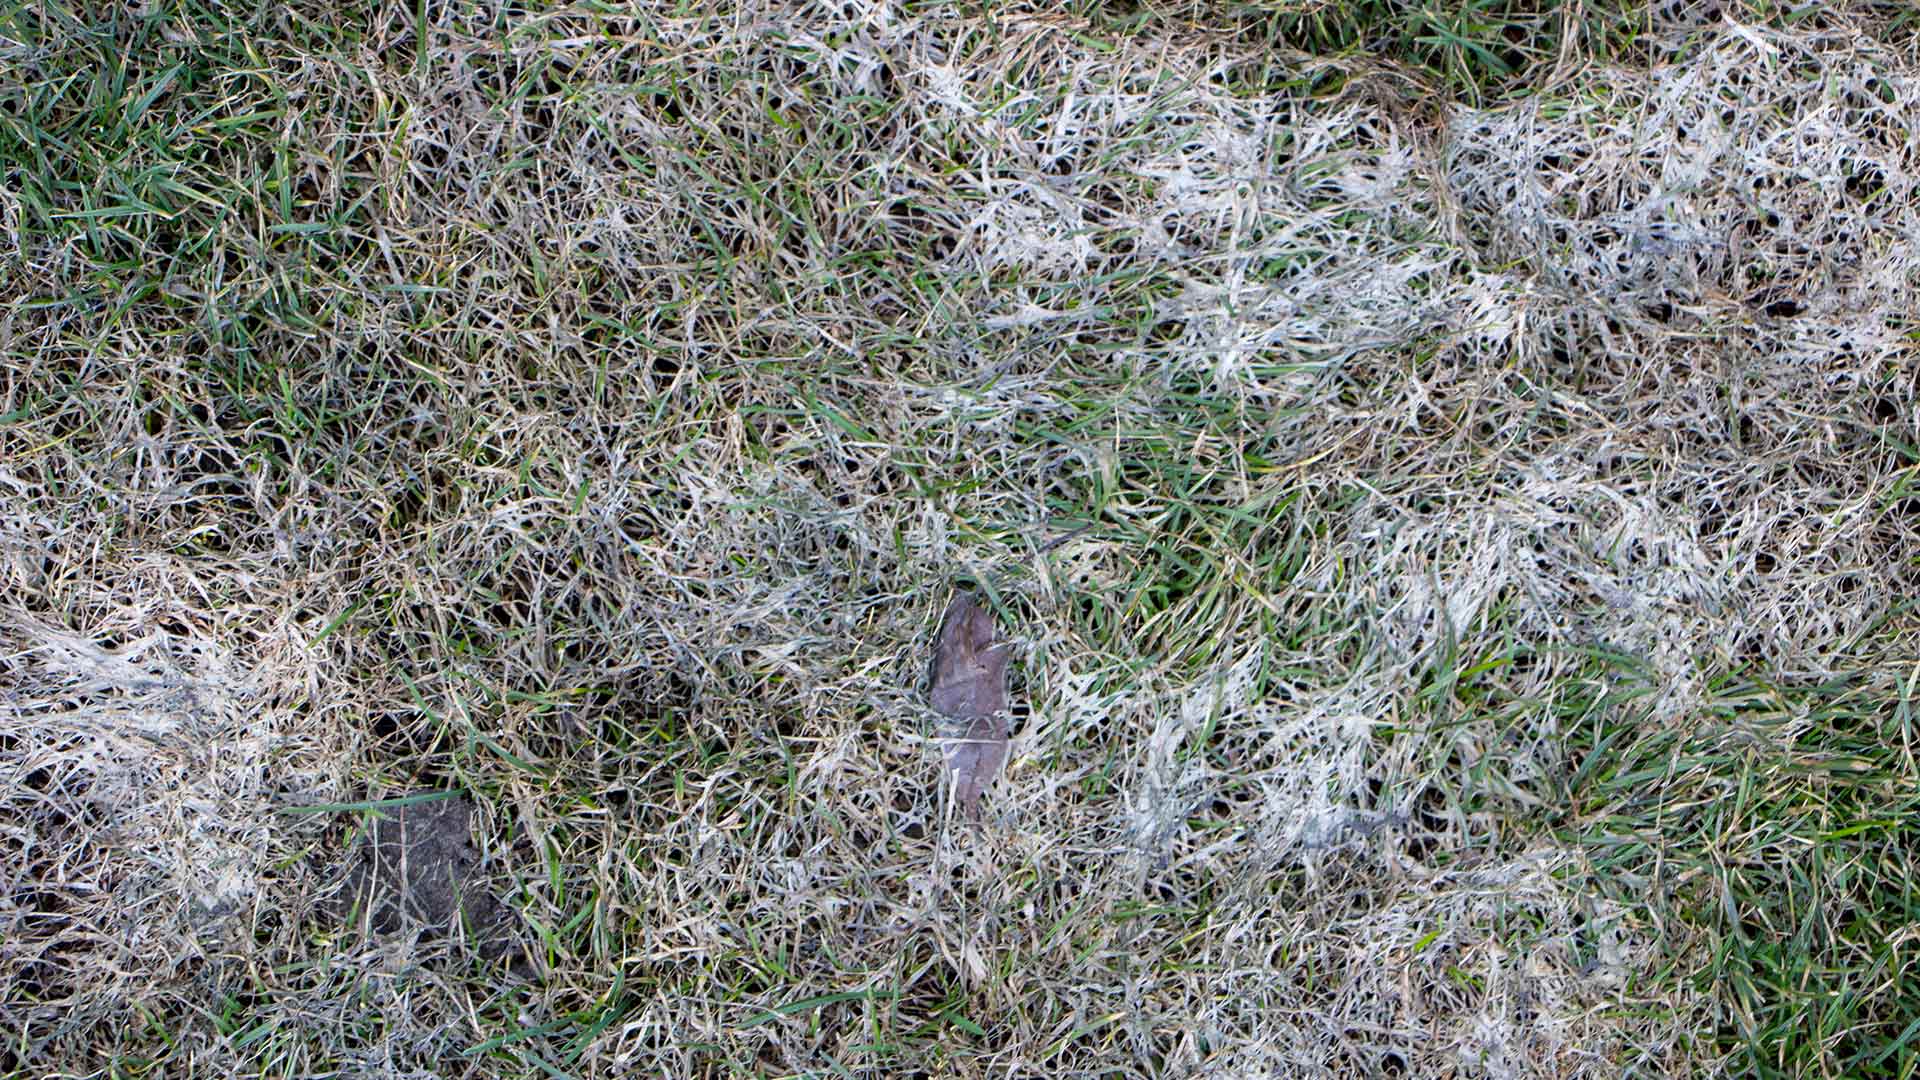 Lawn disease causing ashy colored grass blades near Chesterfield, MI.